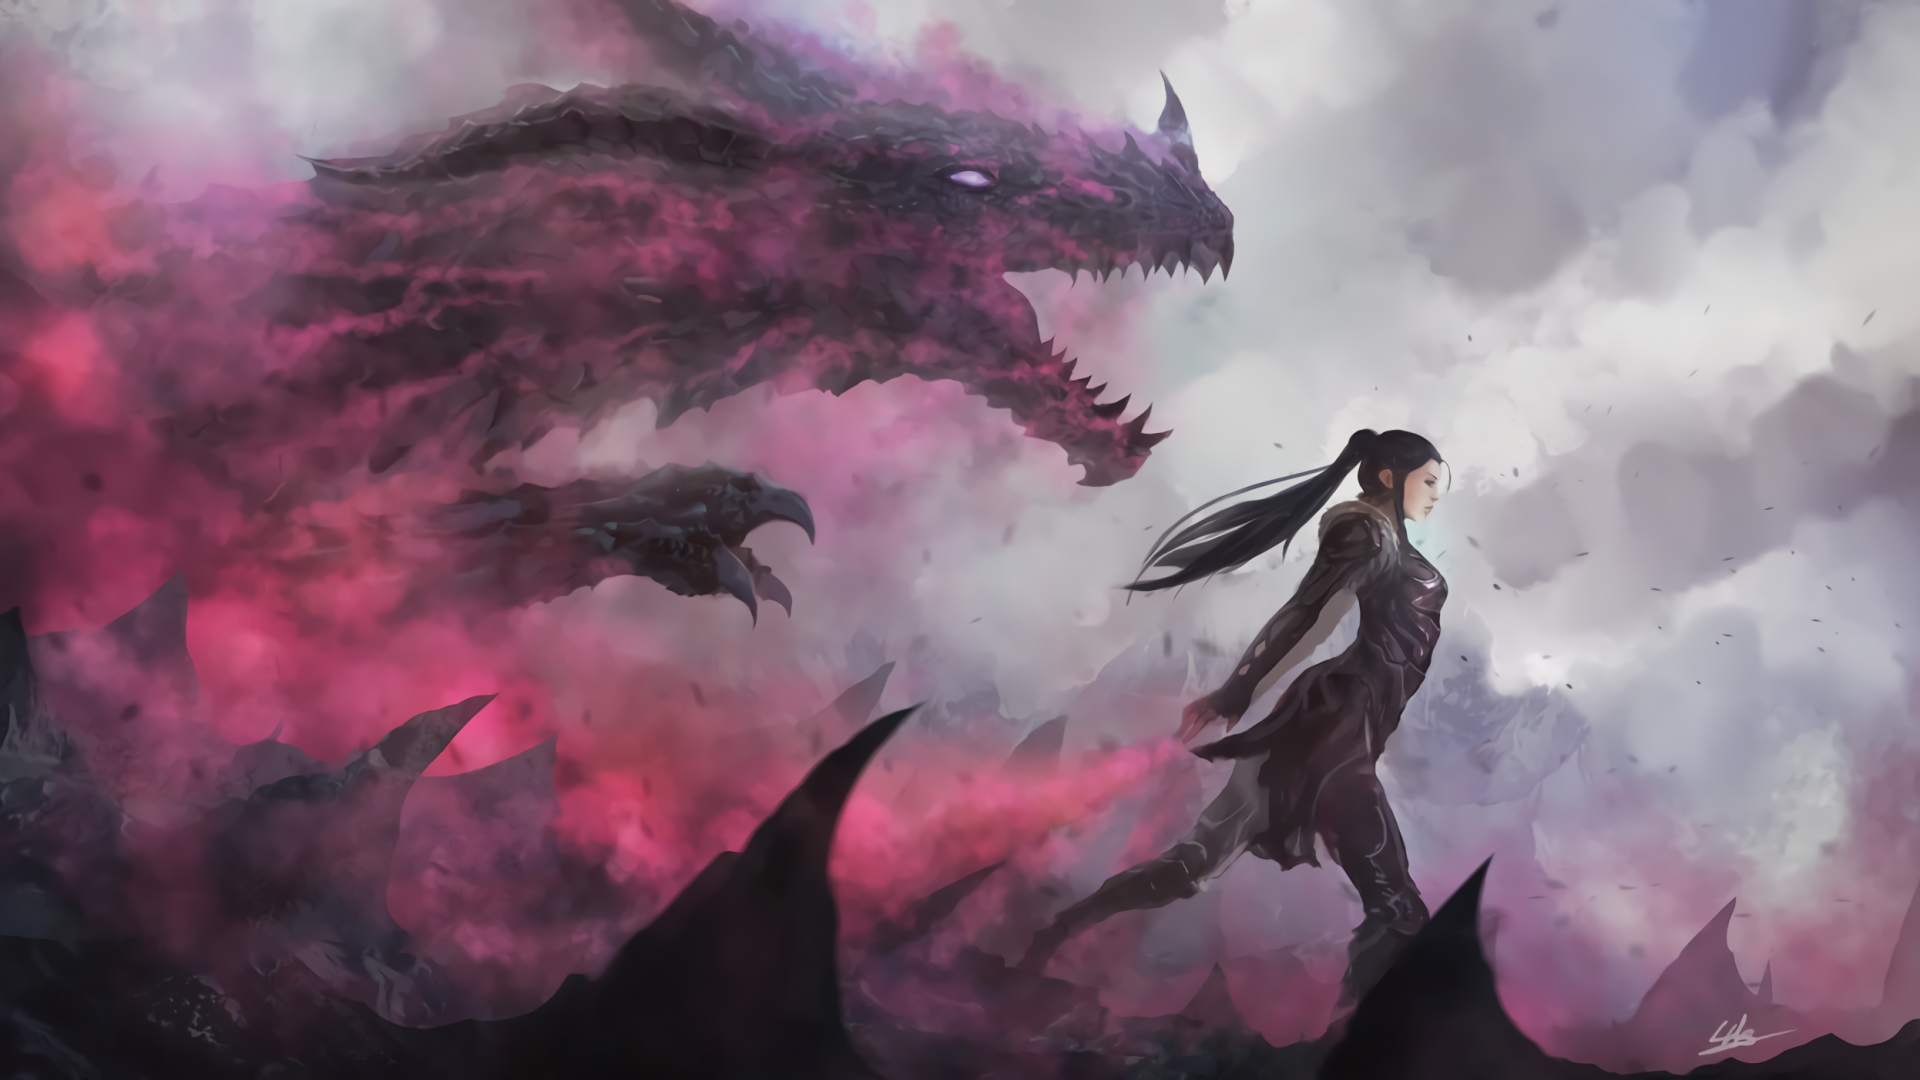 Download 1920x1080 Fantasy Creature, Dragon, Girl, Smoke, Black